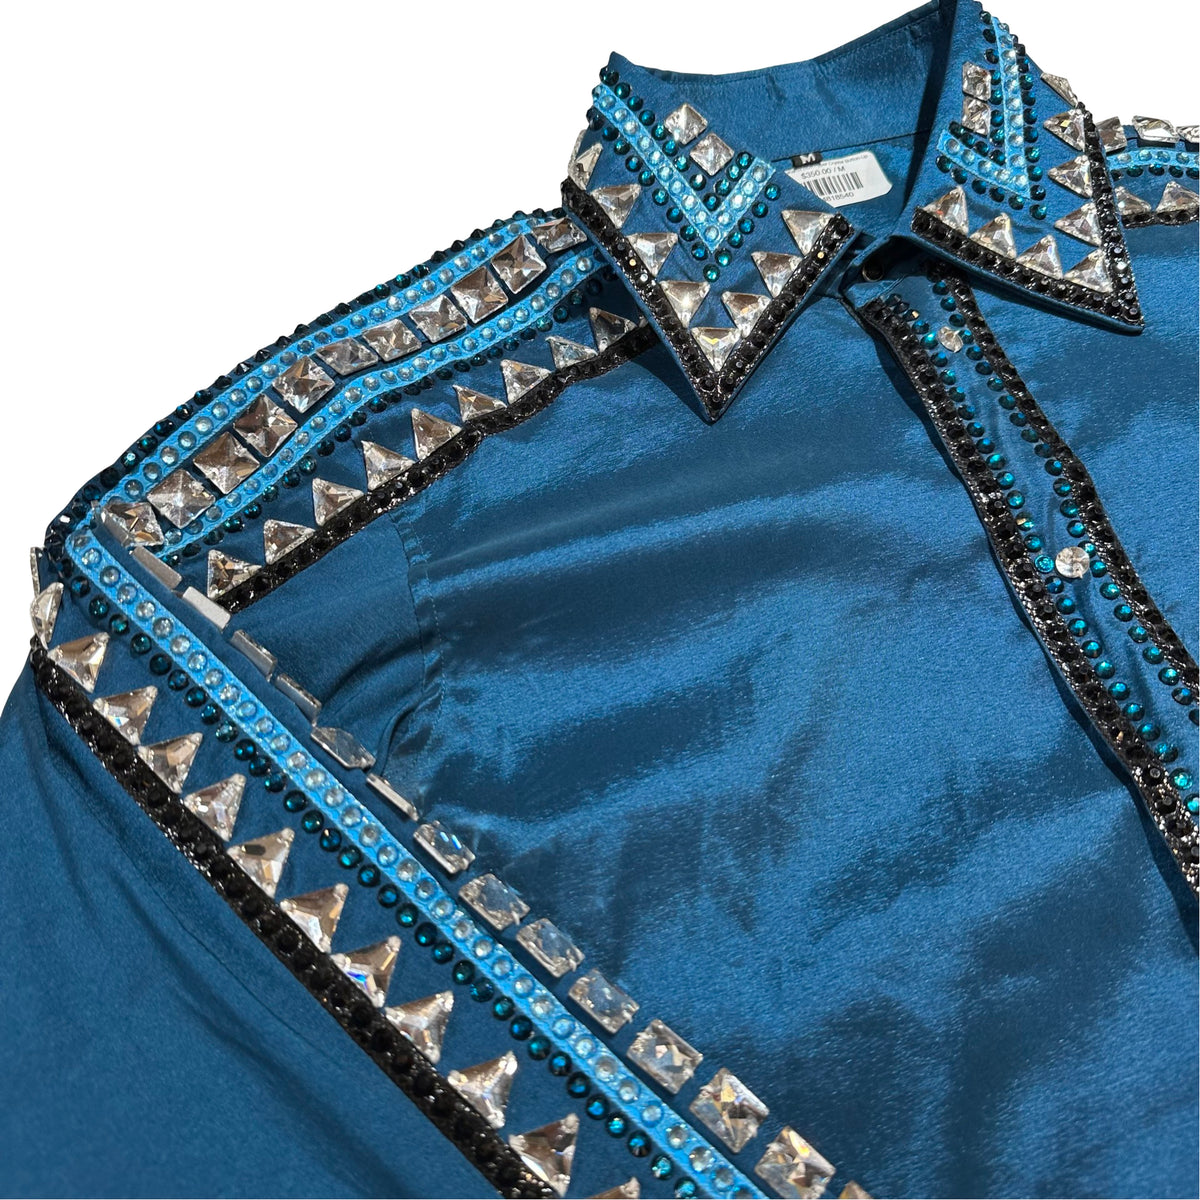 Kashani Bahama Blue Hyper Crystal Button-Up Zip Shirt - Dudes Boutique